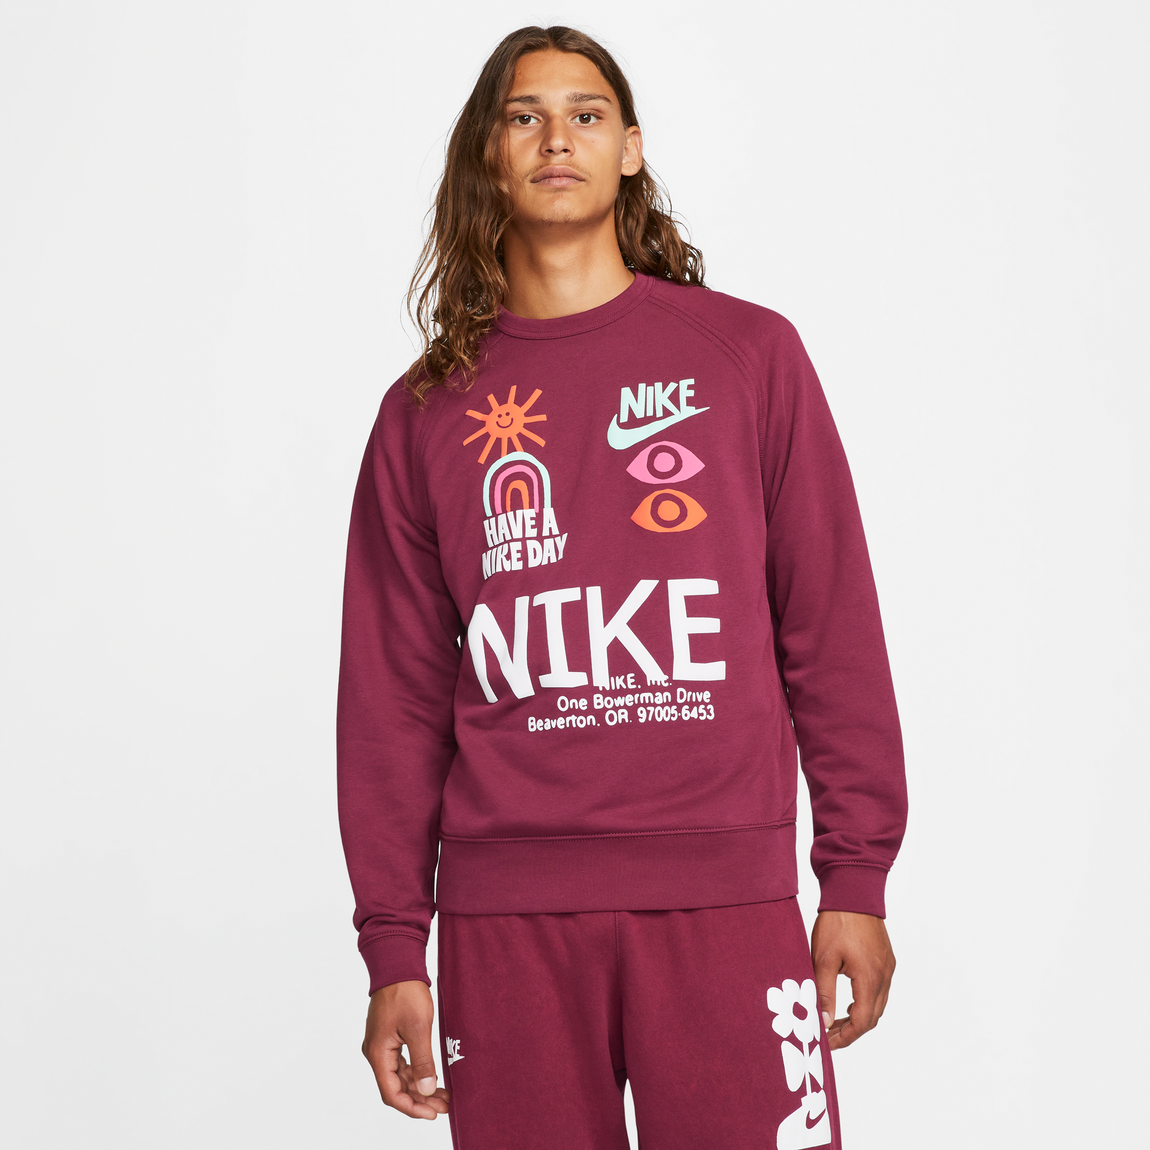 Nike Sportswear Have A Nike Day Crewneck Sweatshirt (Dark Beetroot) - Nike Sportswear Have A Nike Day Crewneck Sweatshirt (Dark Beetroot) - 